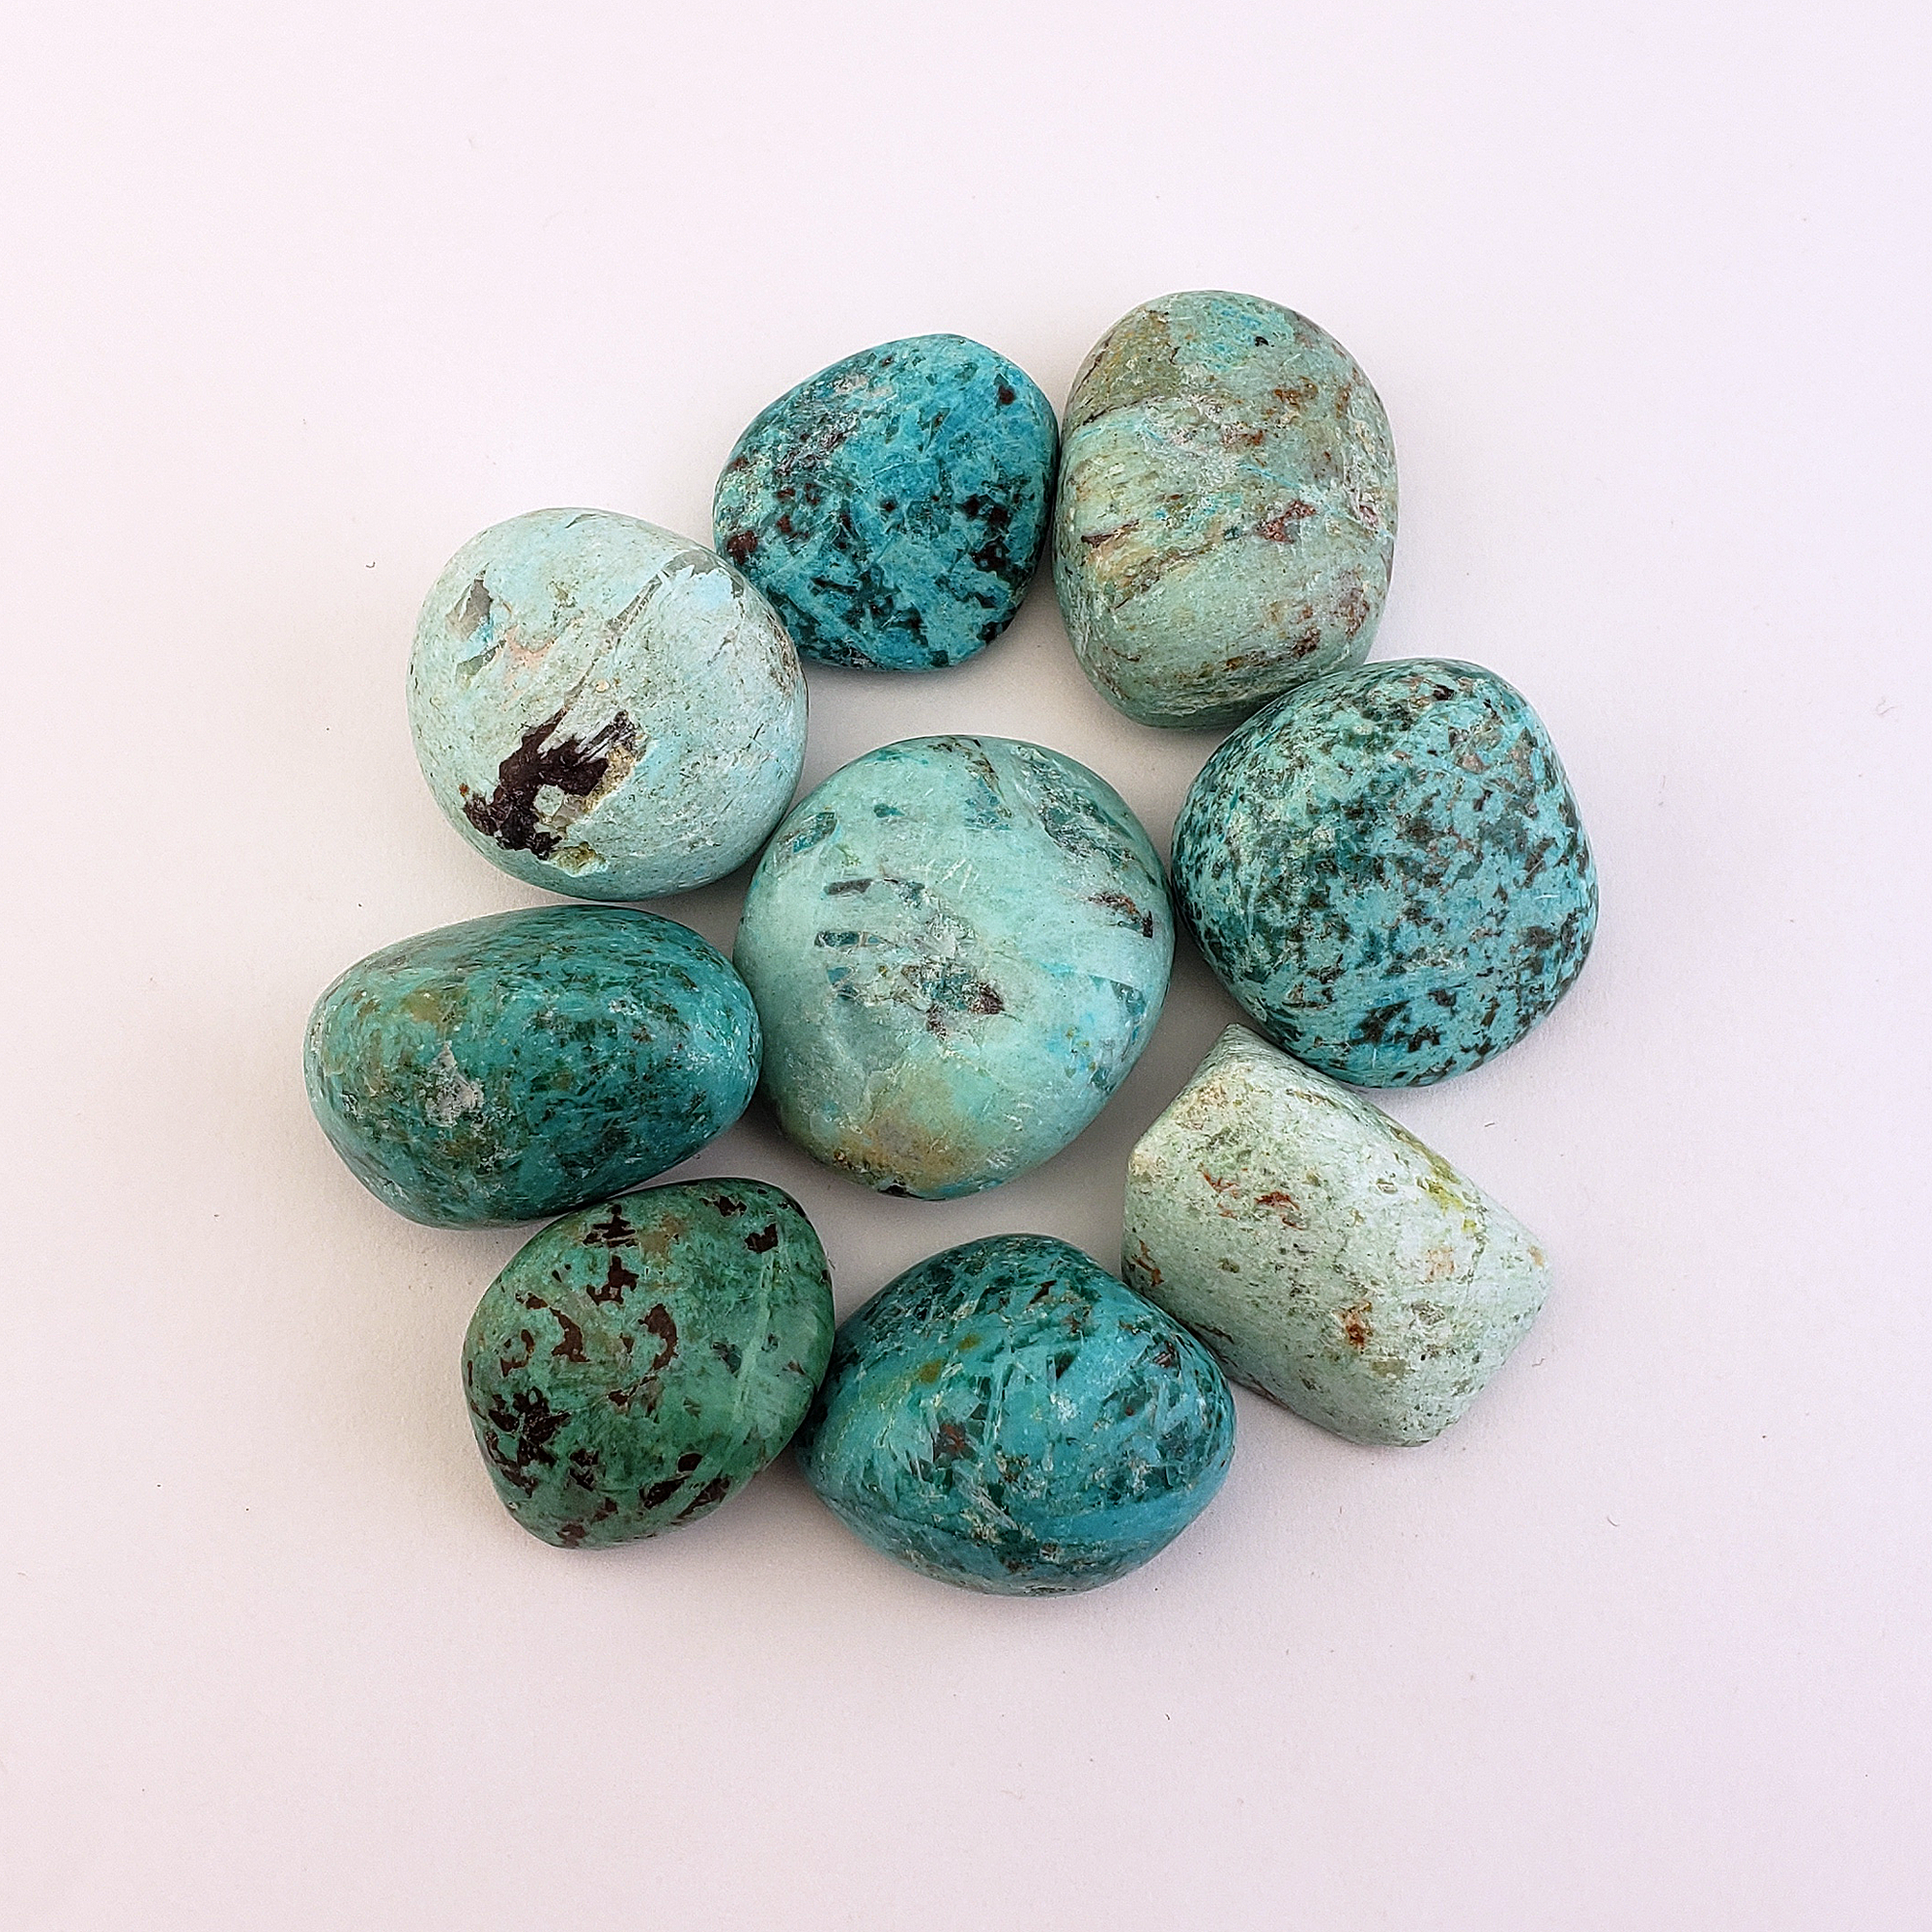 Peruvian Turquoise Natural Tumbled Stone - One Stone - White Background